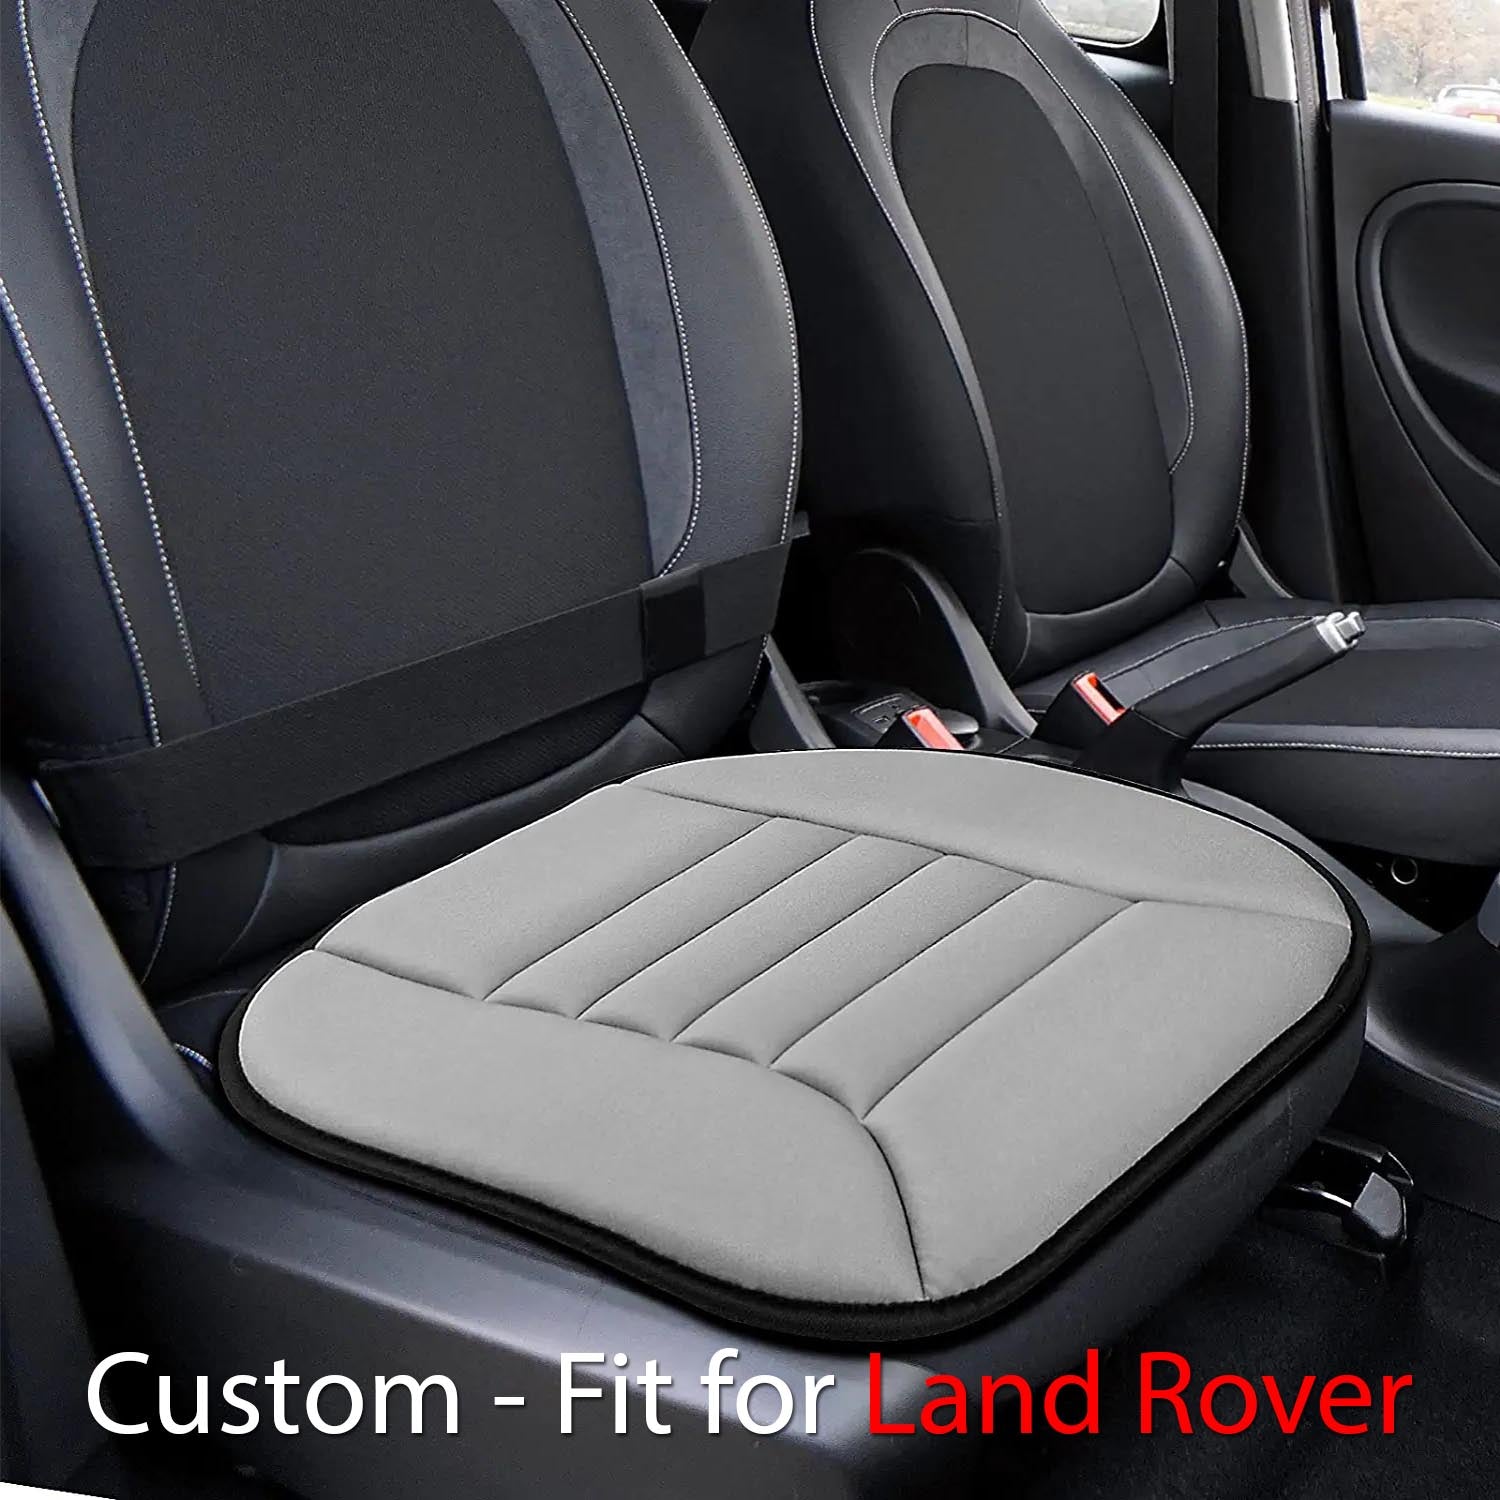 Car Seat Cushion with 1.2inch Comfort Memory Foam, Custom-Fit For Car, Seat Cushion for Car and Office Chair DLLR247